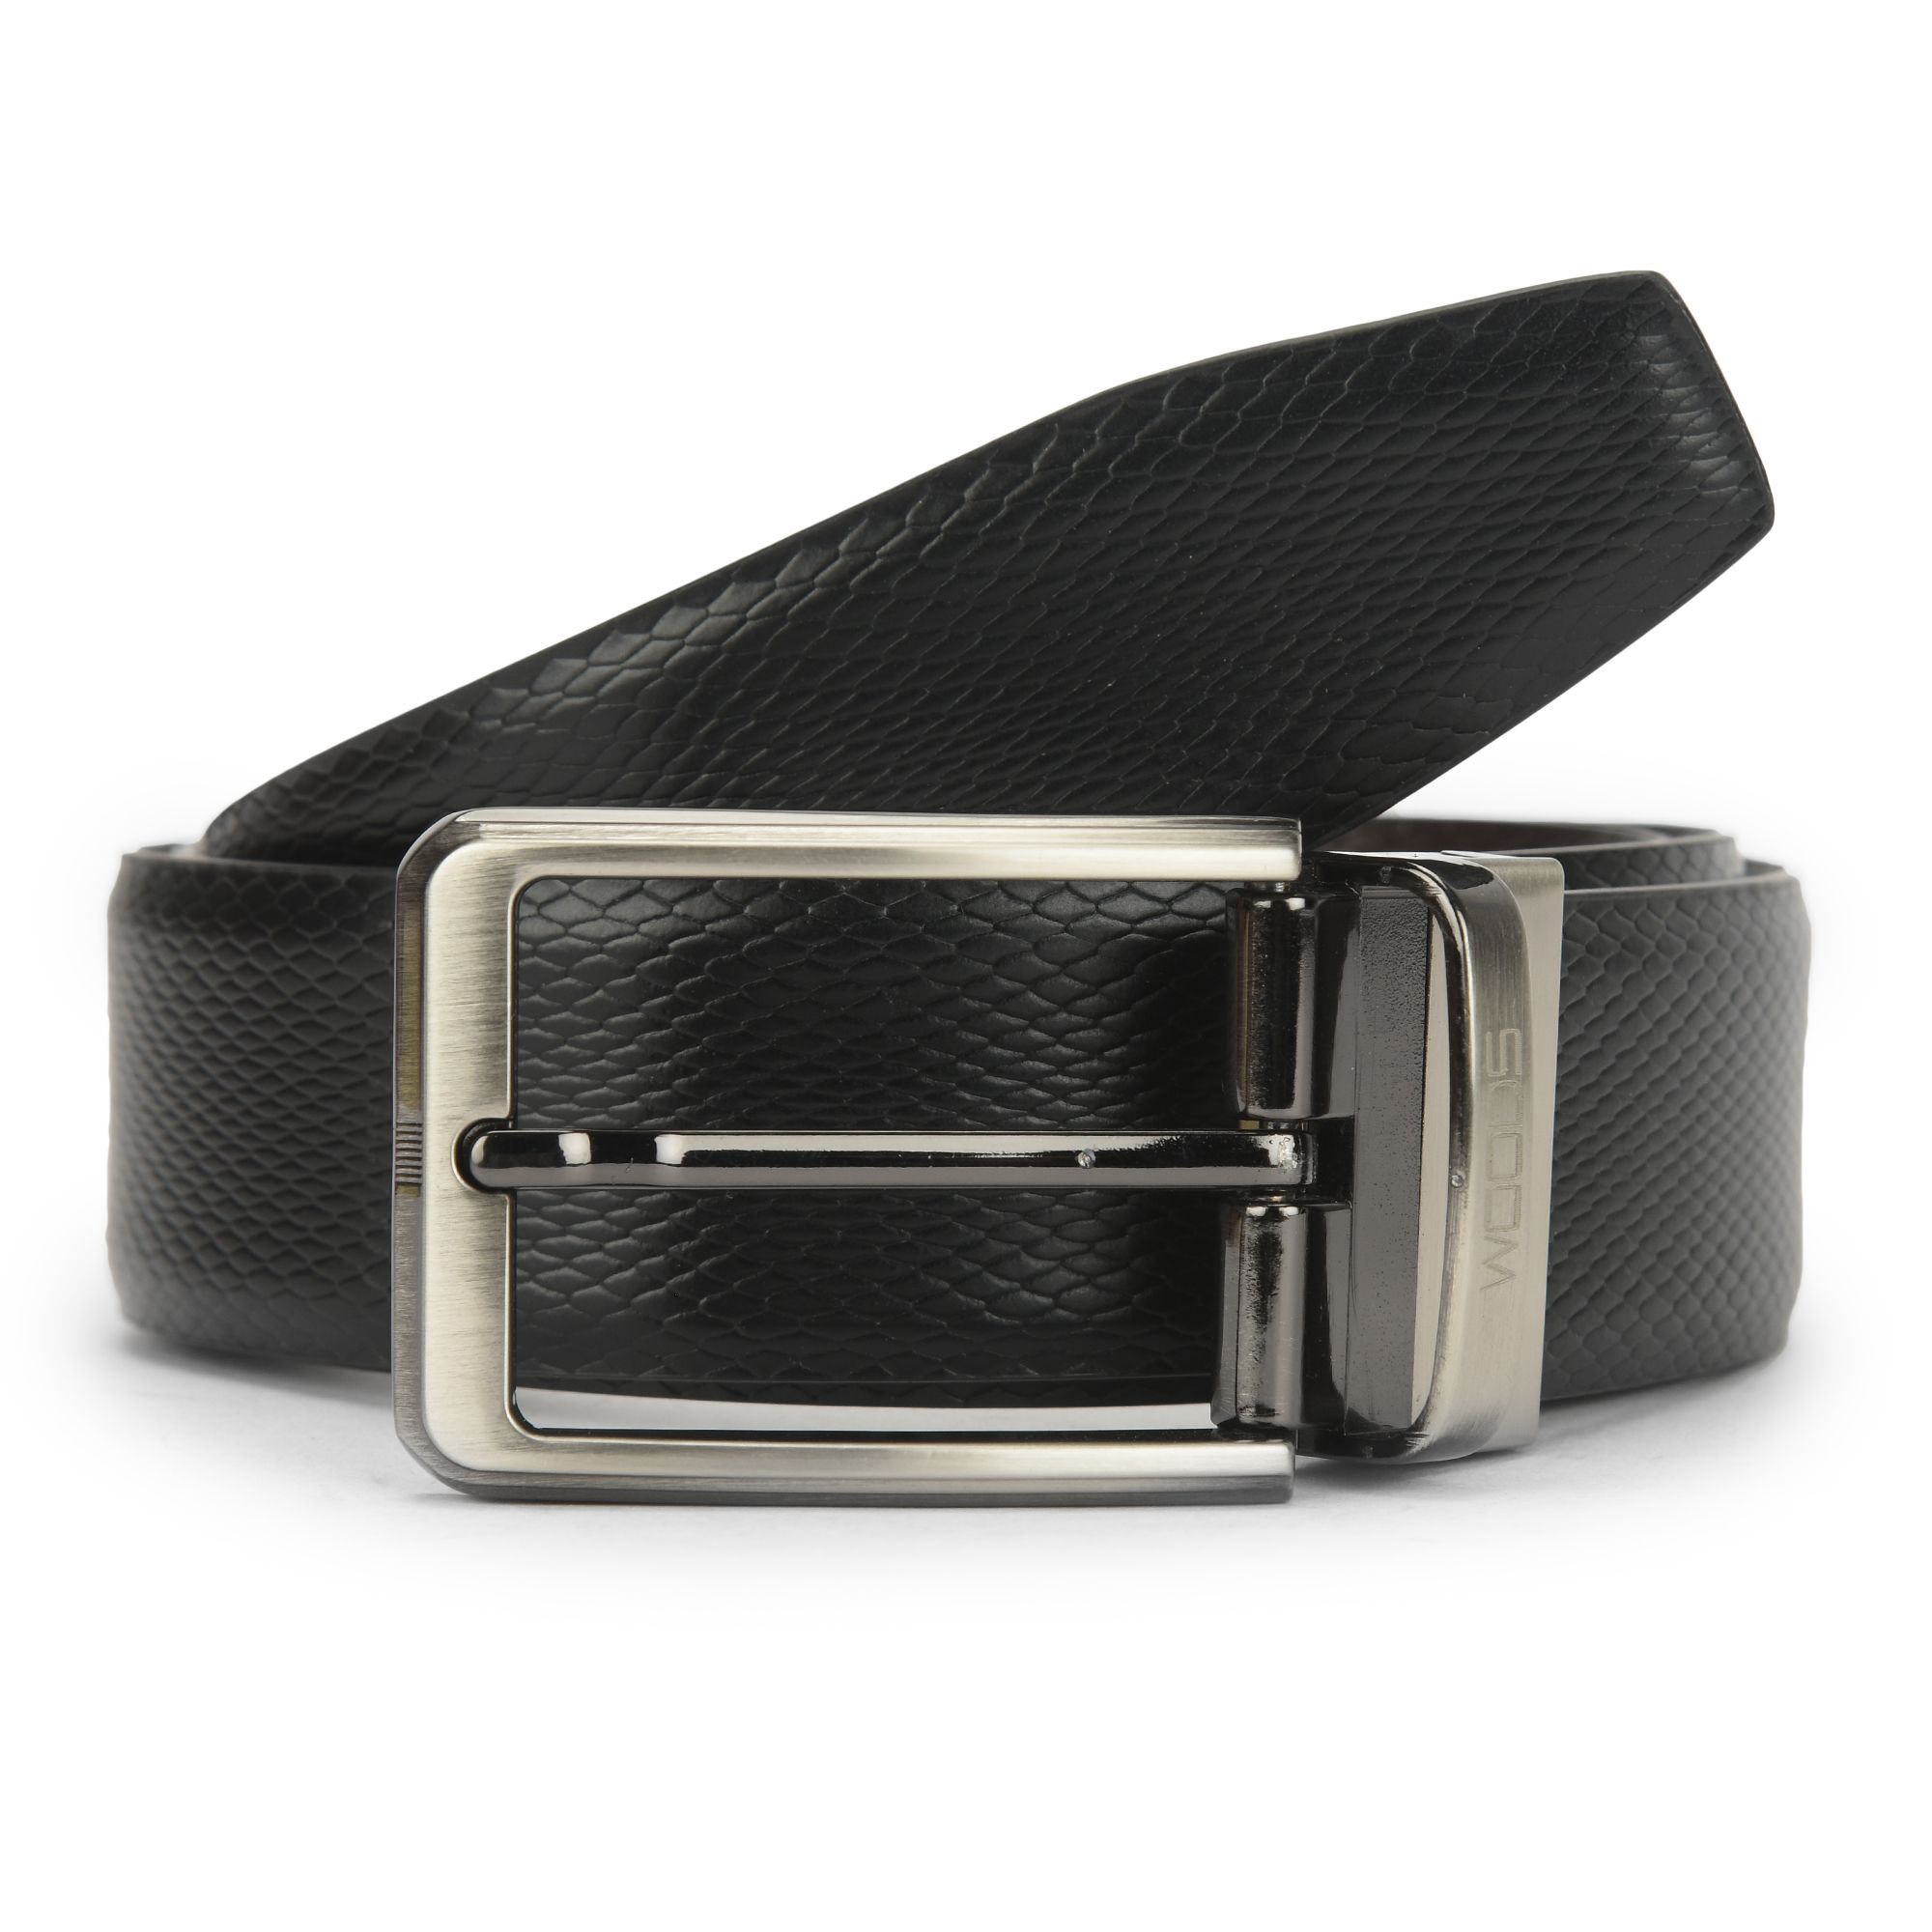 Black/Brown reversible leather belt